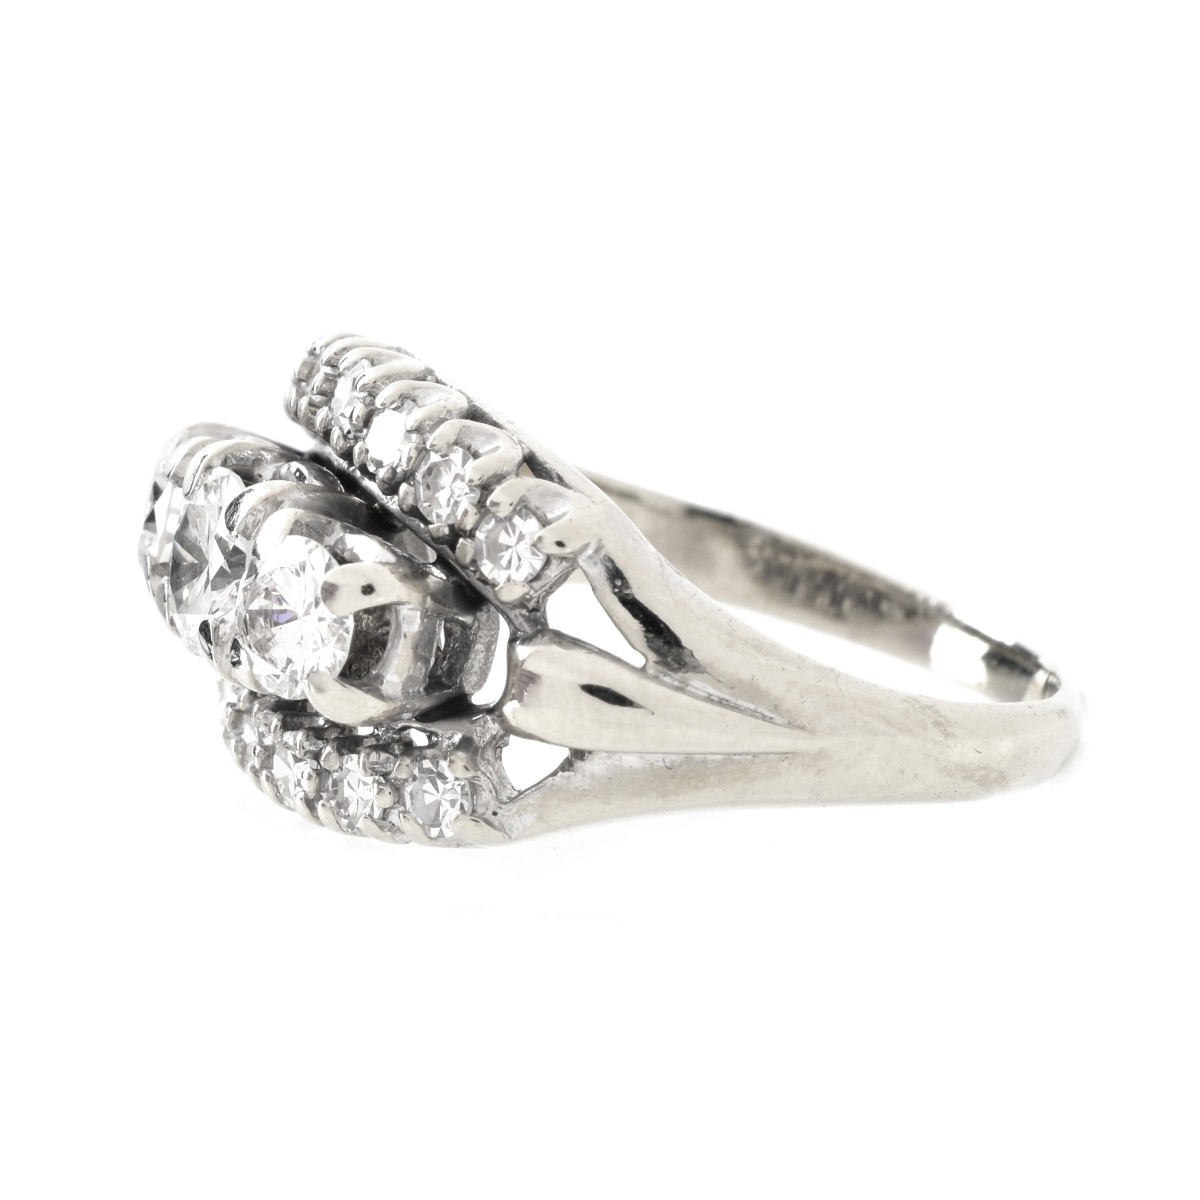 Circa 1940s Three Diamond Ring